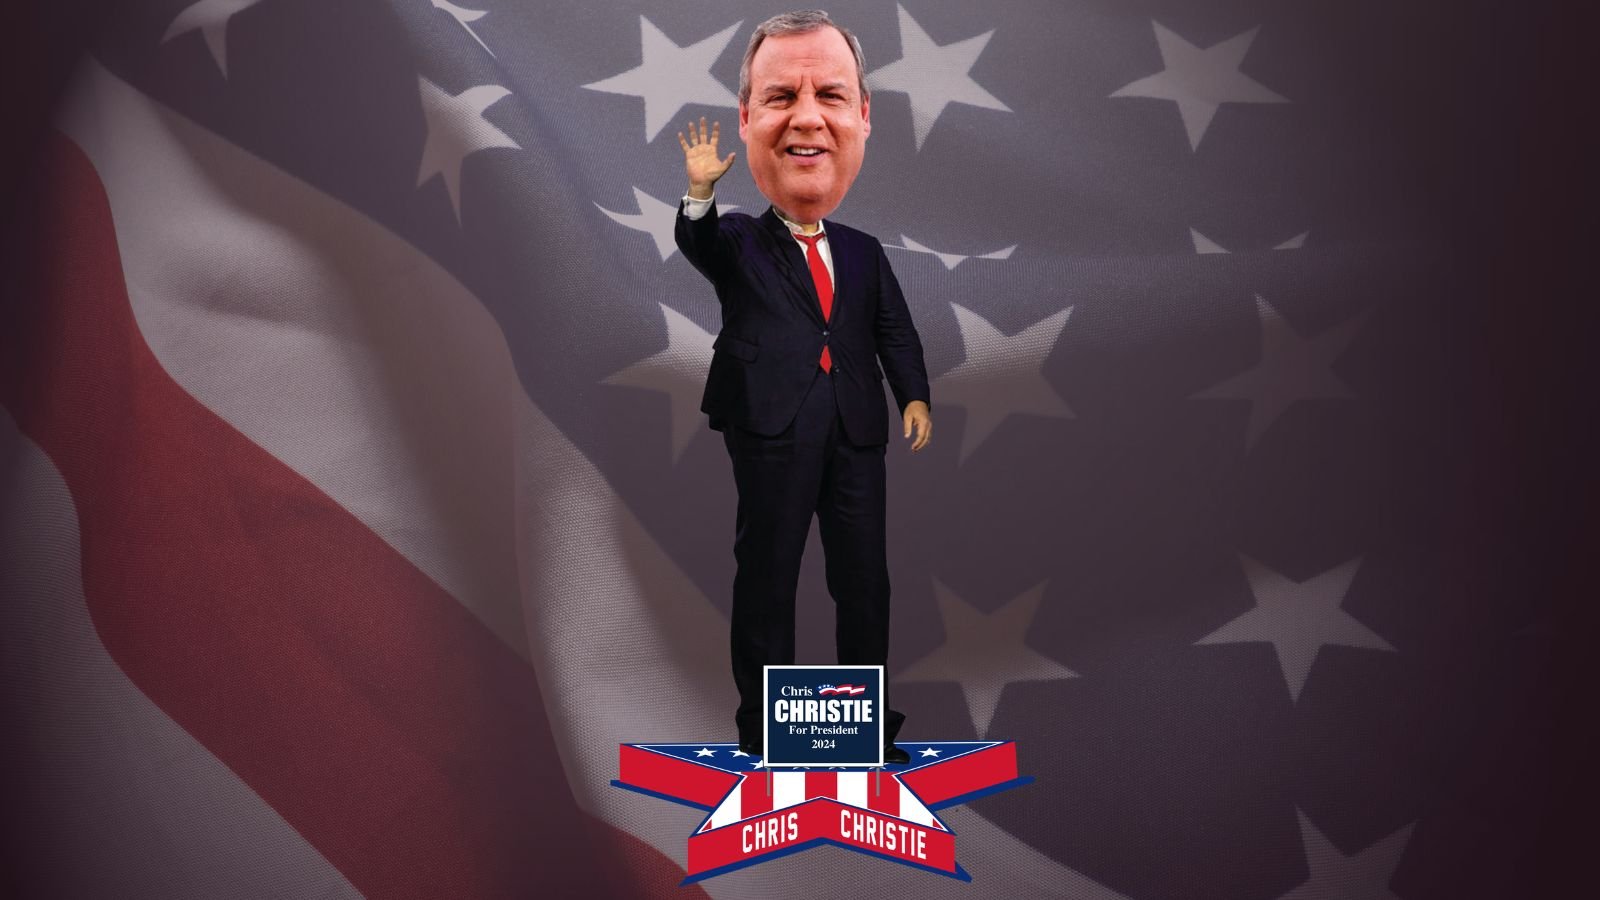 Chris Christie 2024 Presidential Candidate Bobblehead (3).jpg